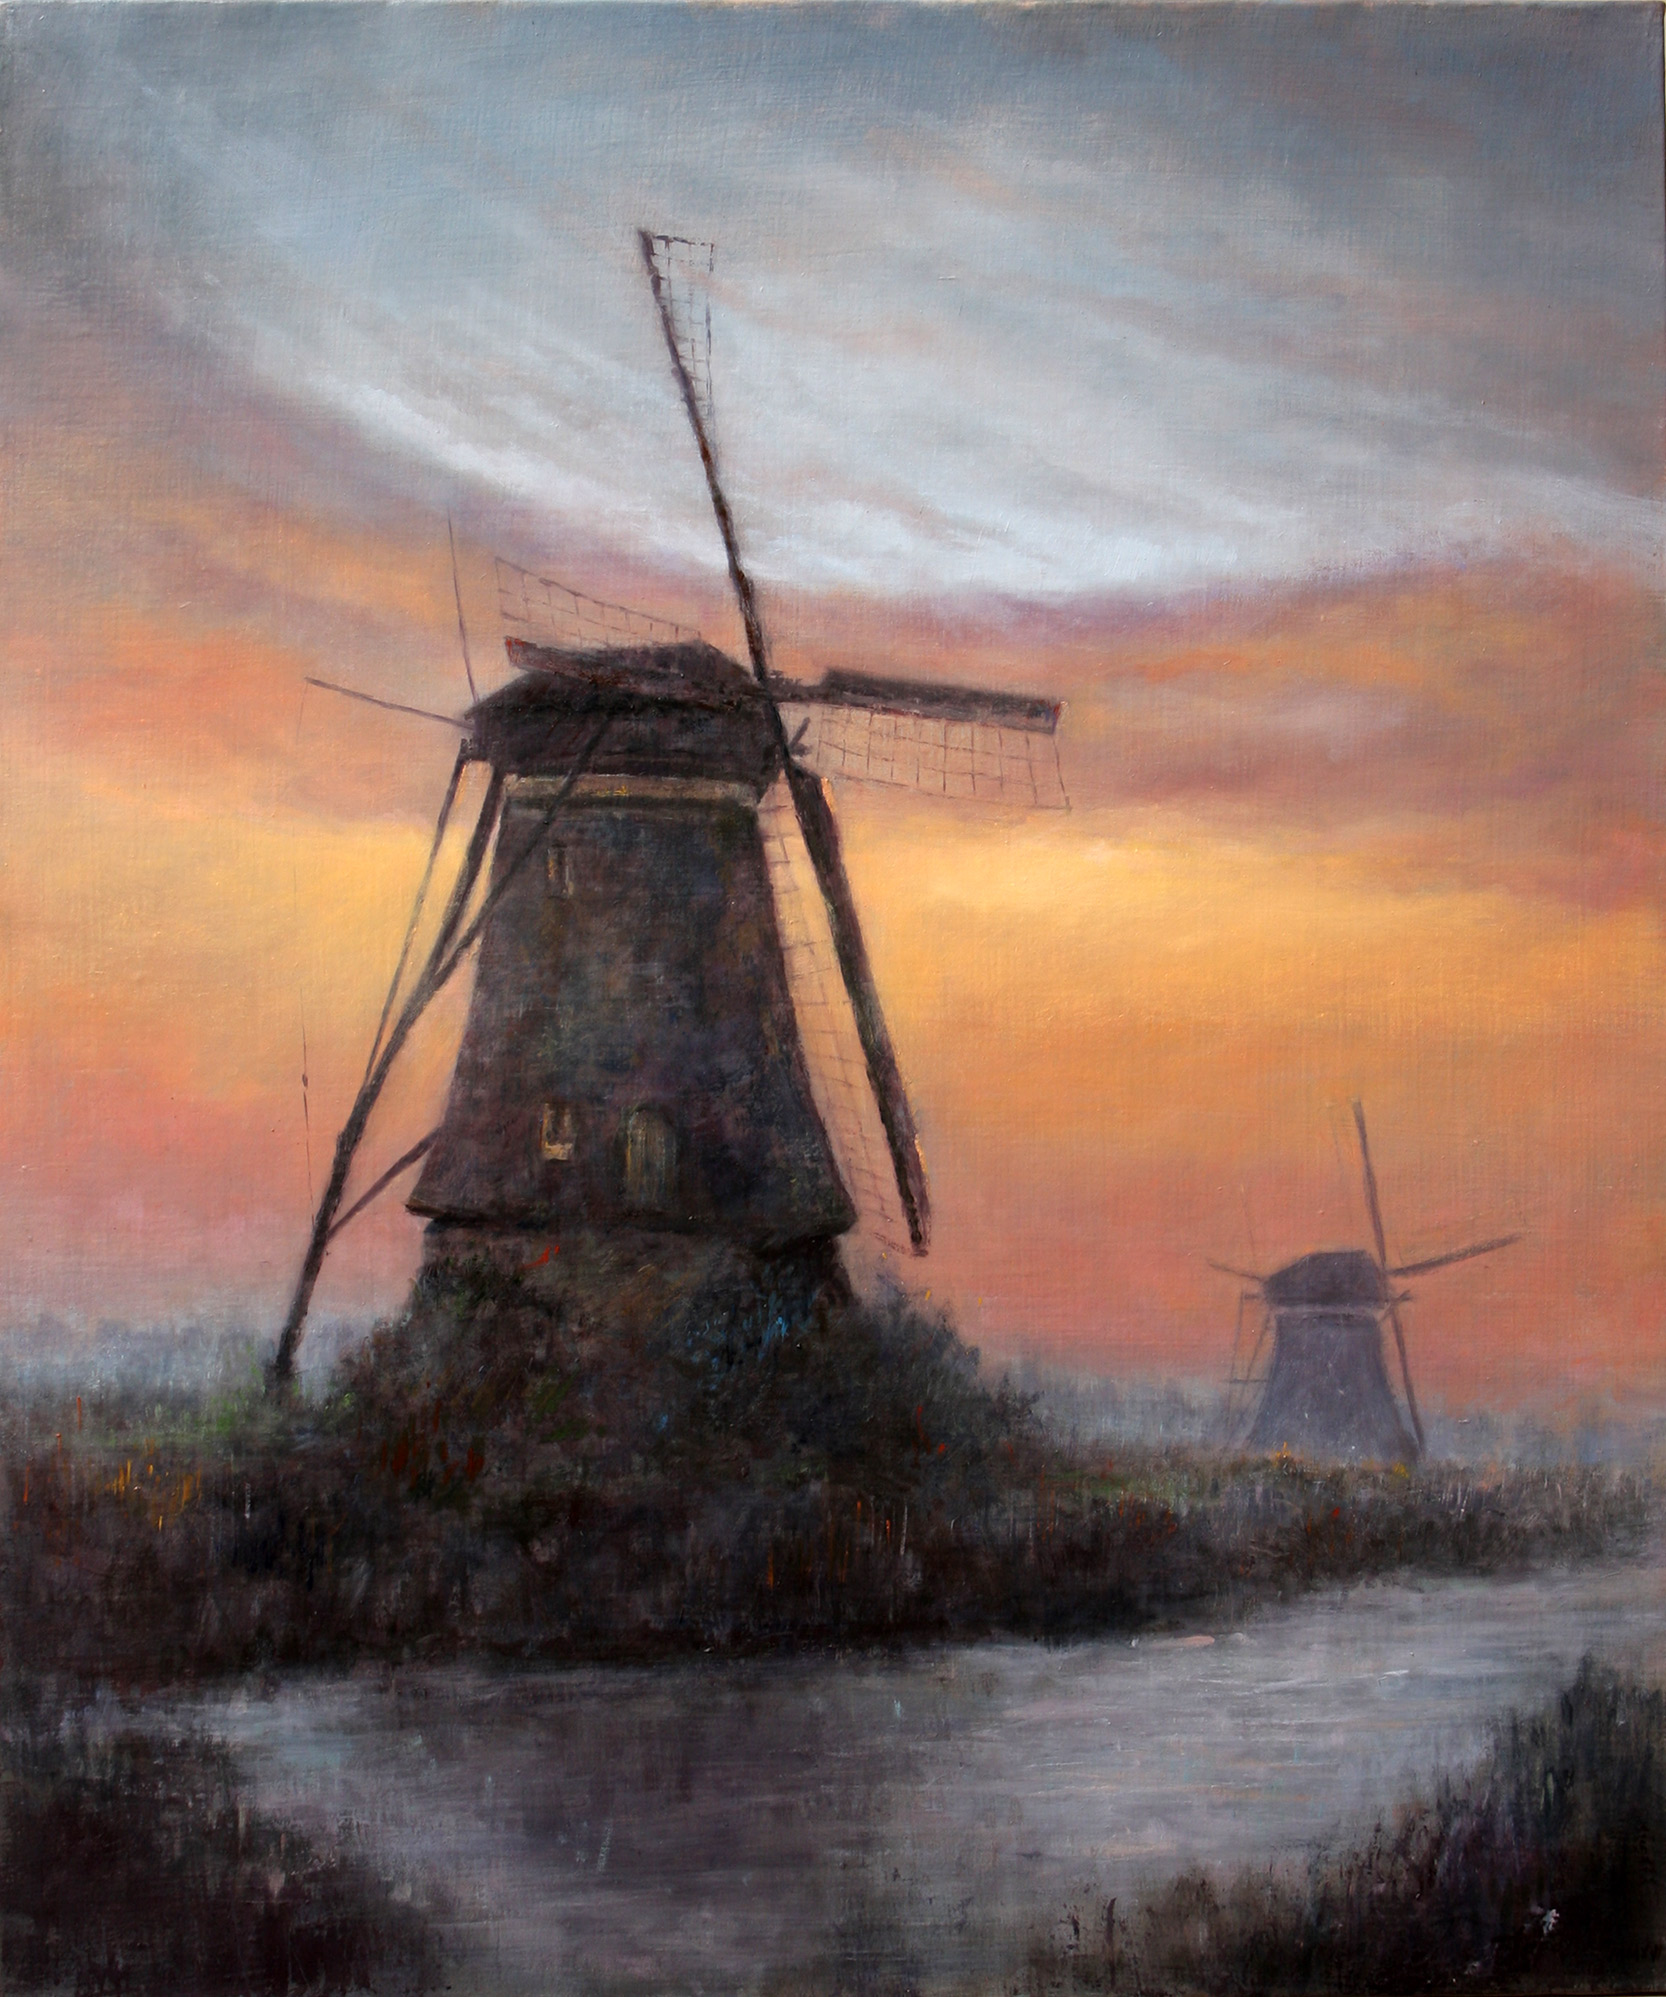 Windmills in Sunset - Oil Painting - Fine Arts Gallery - Original fine ...